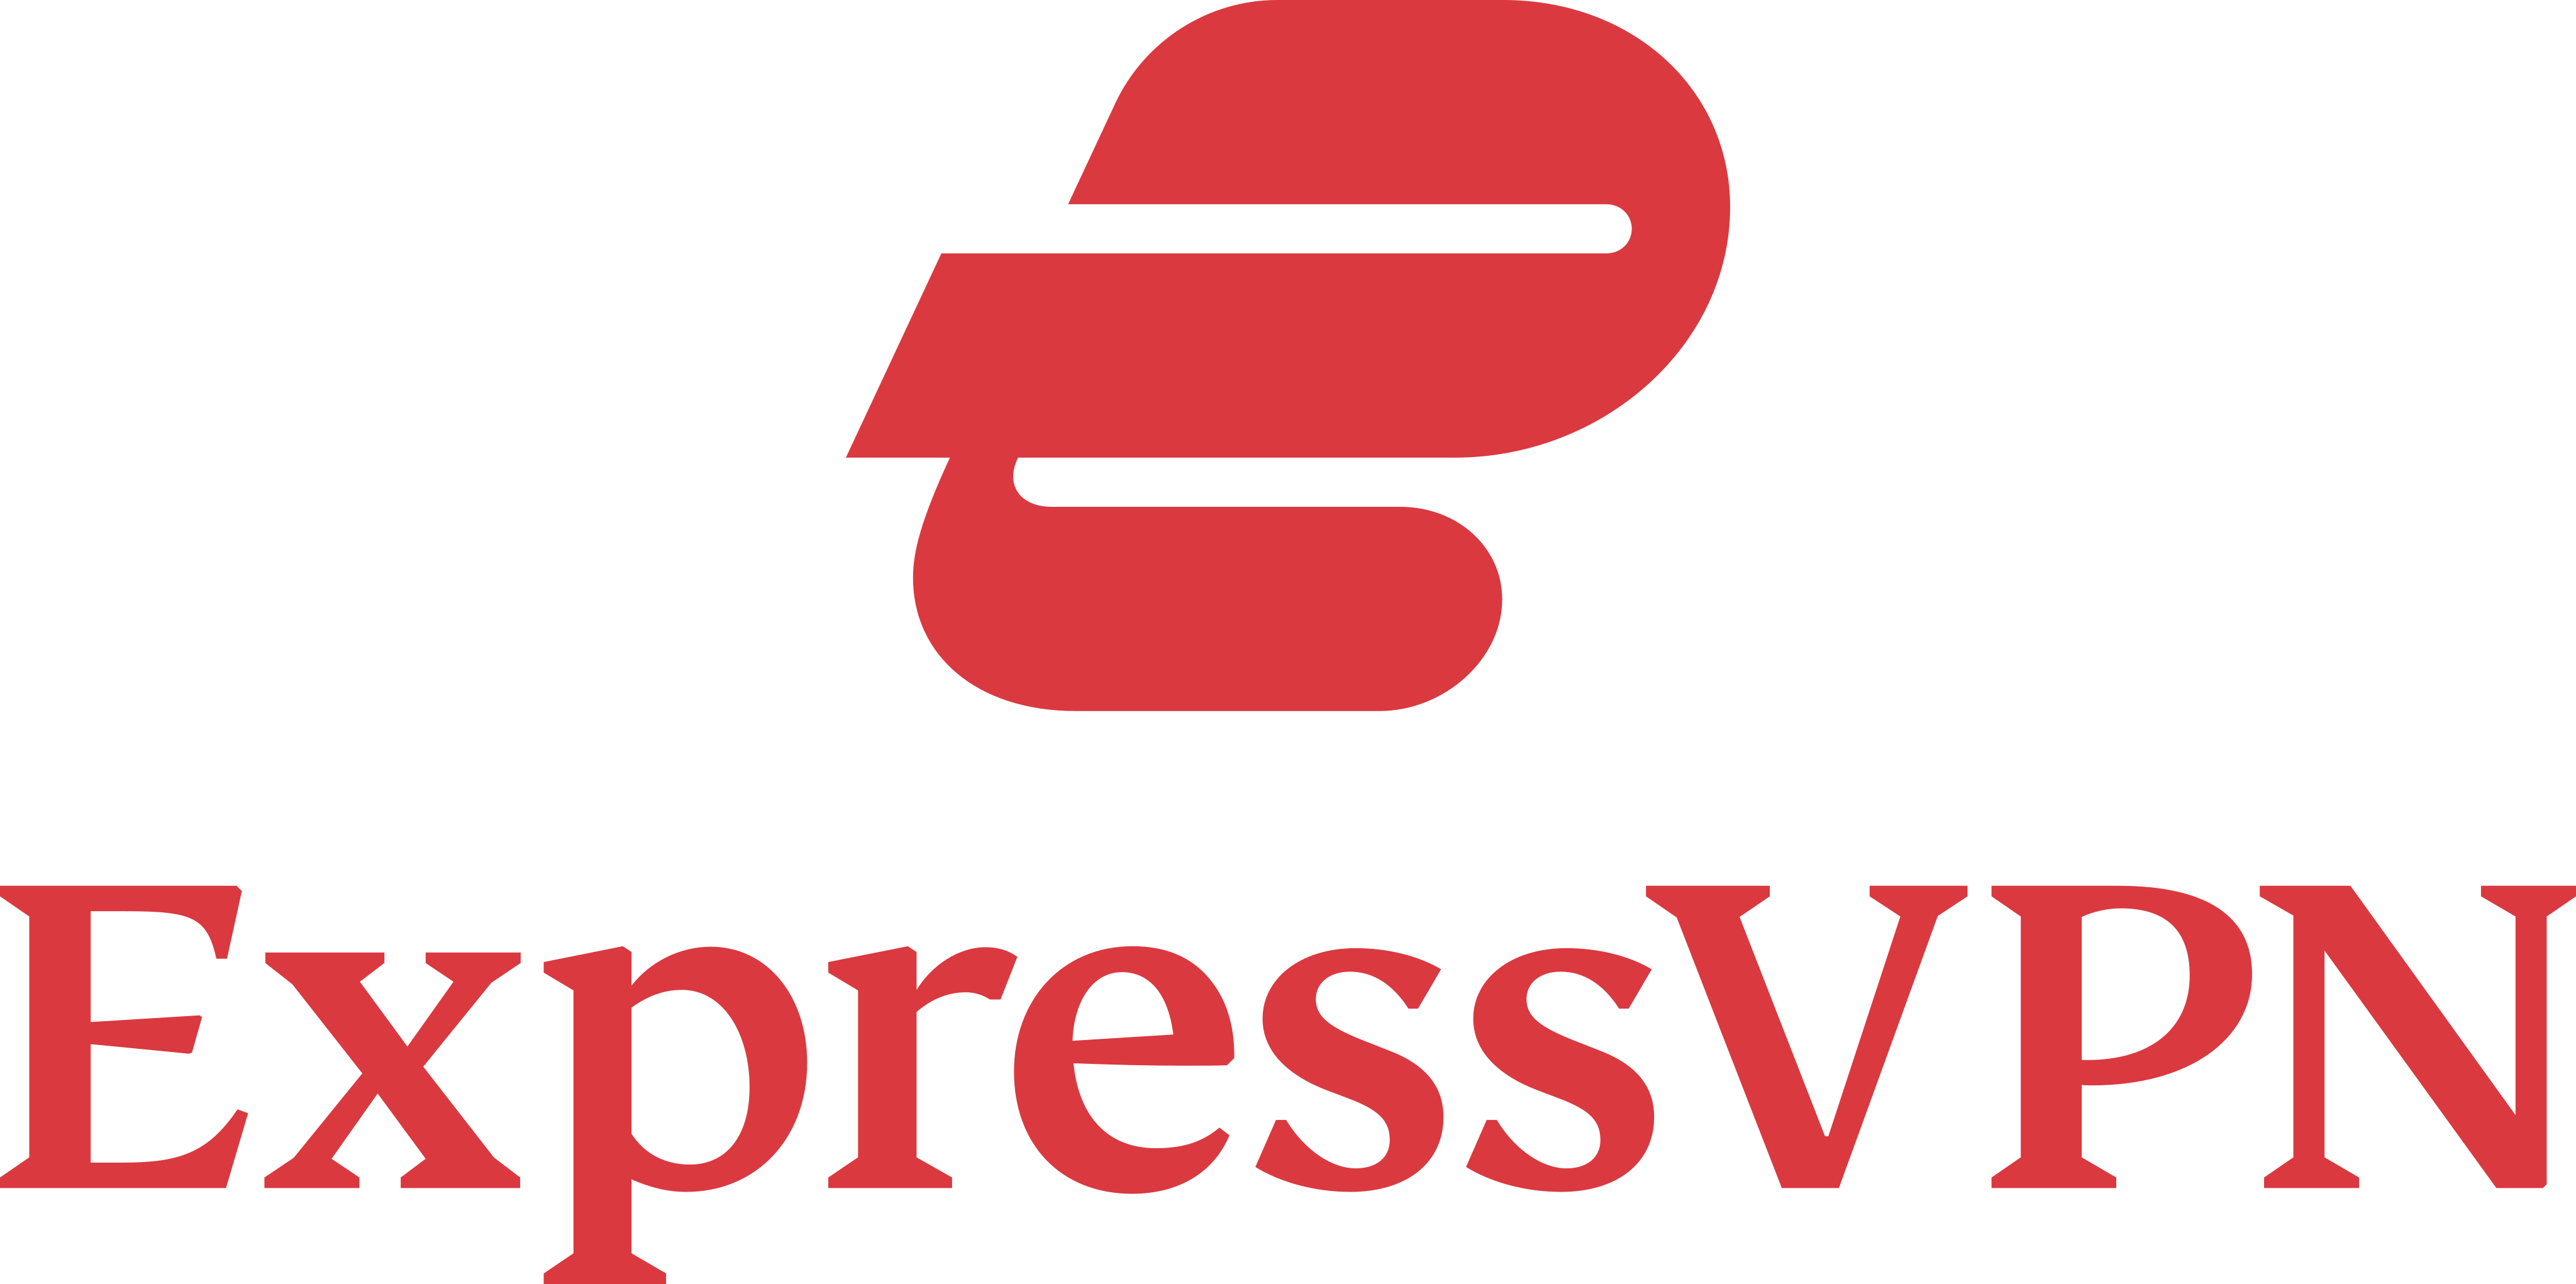 expressvpn logo 1 - ExpressVPN Logo